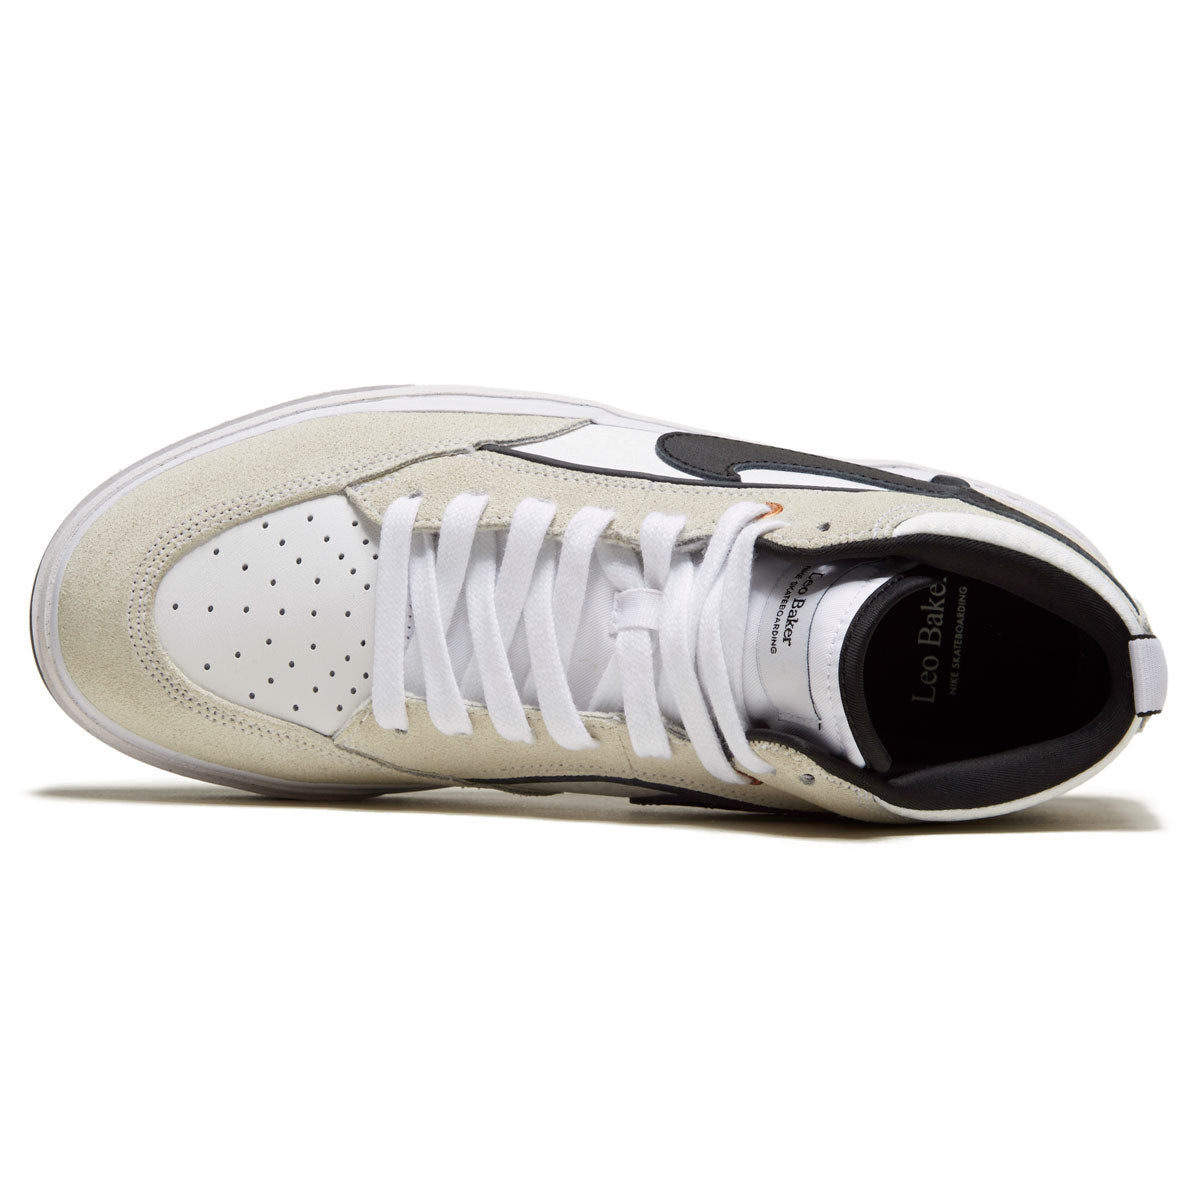 Nike SB React Leo Shoes - White/Black image 3